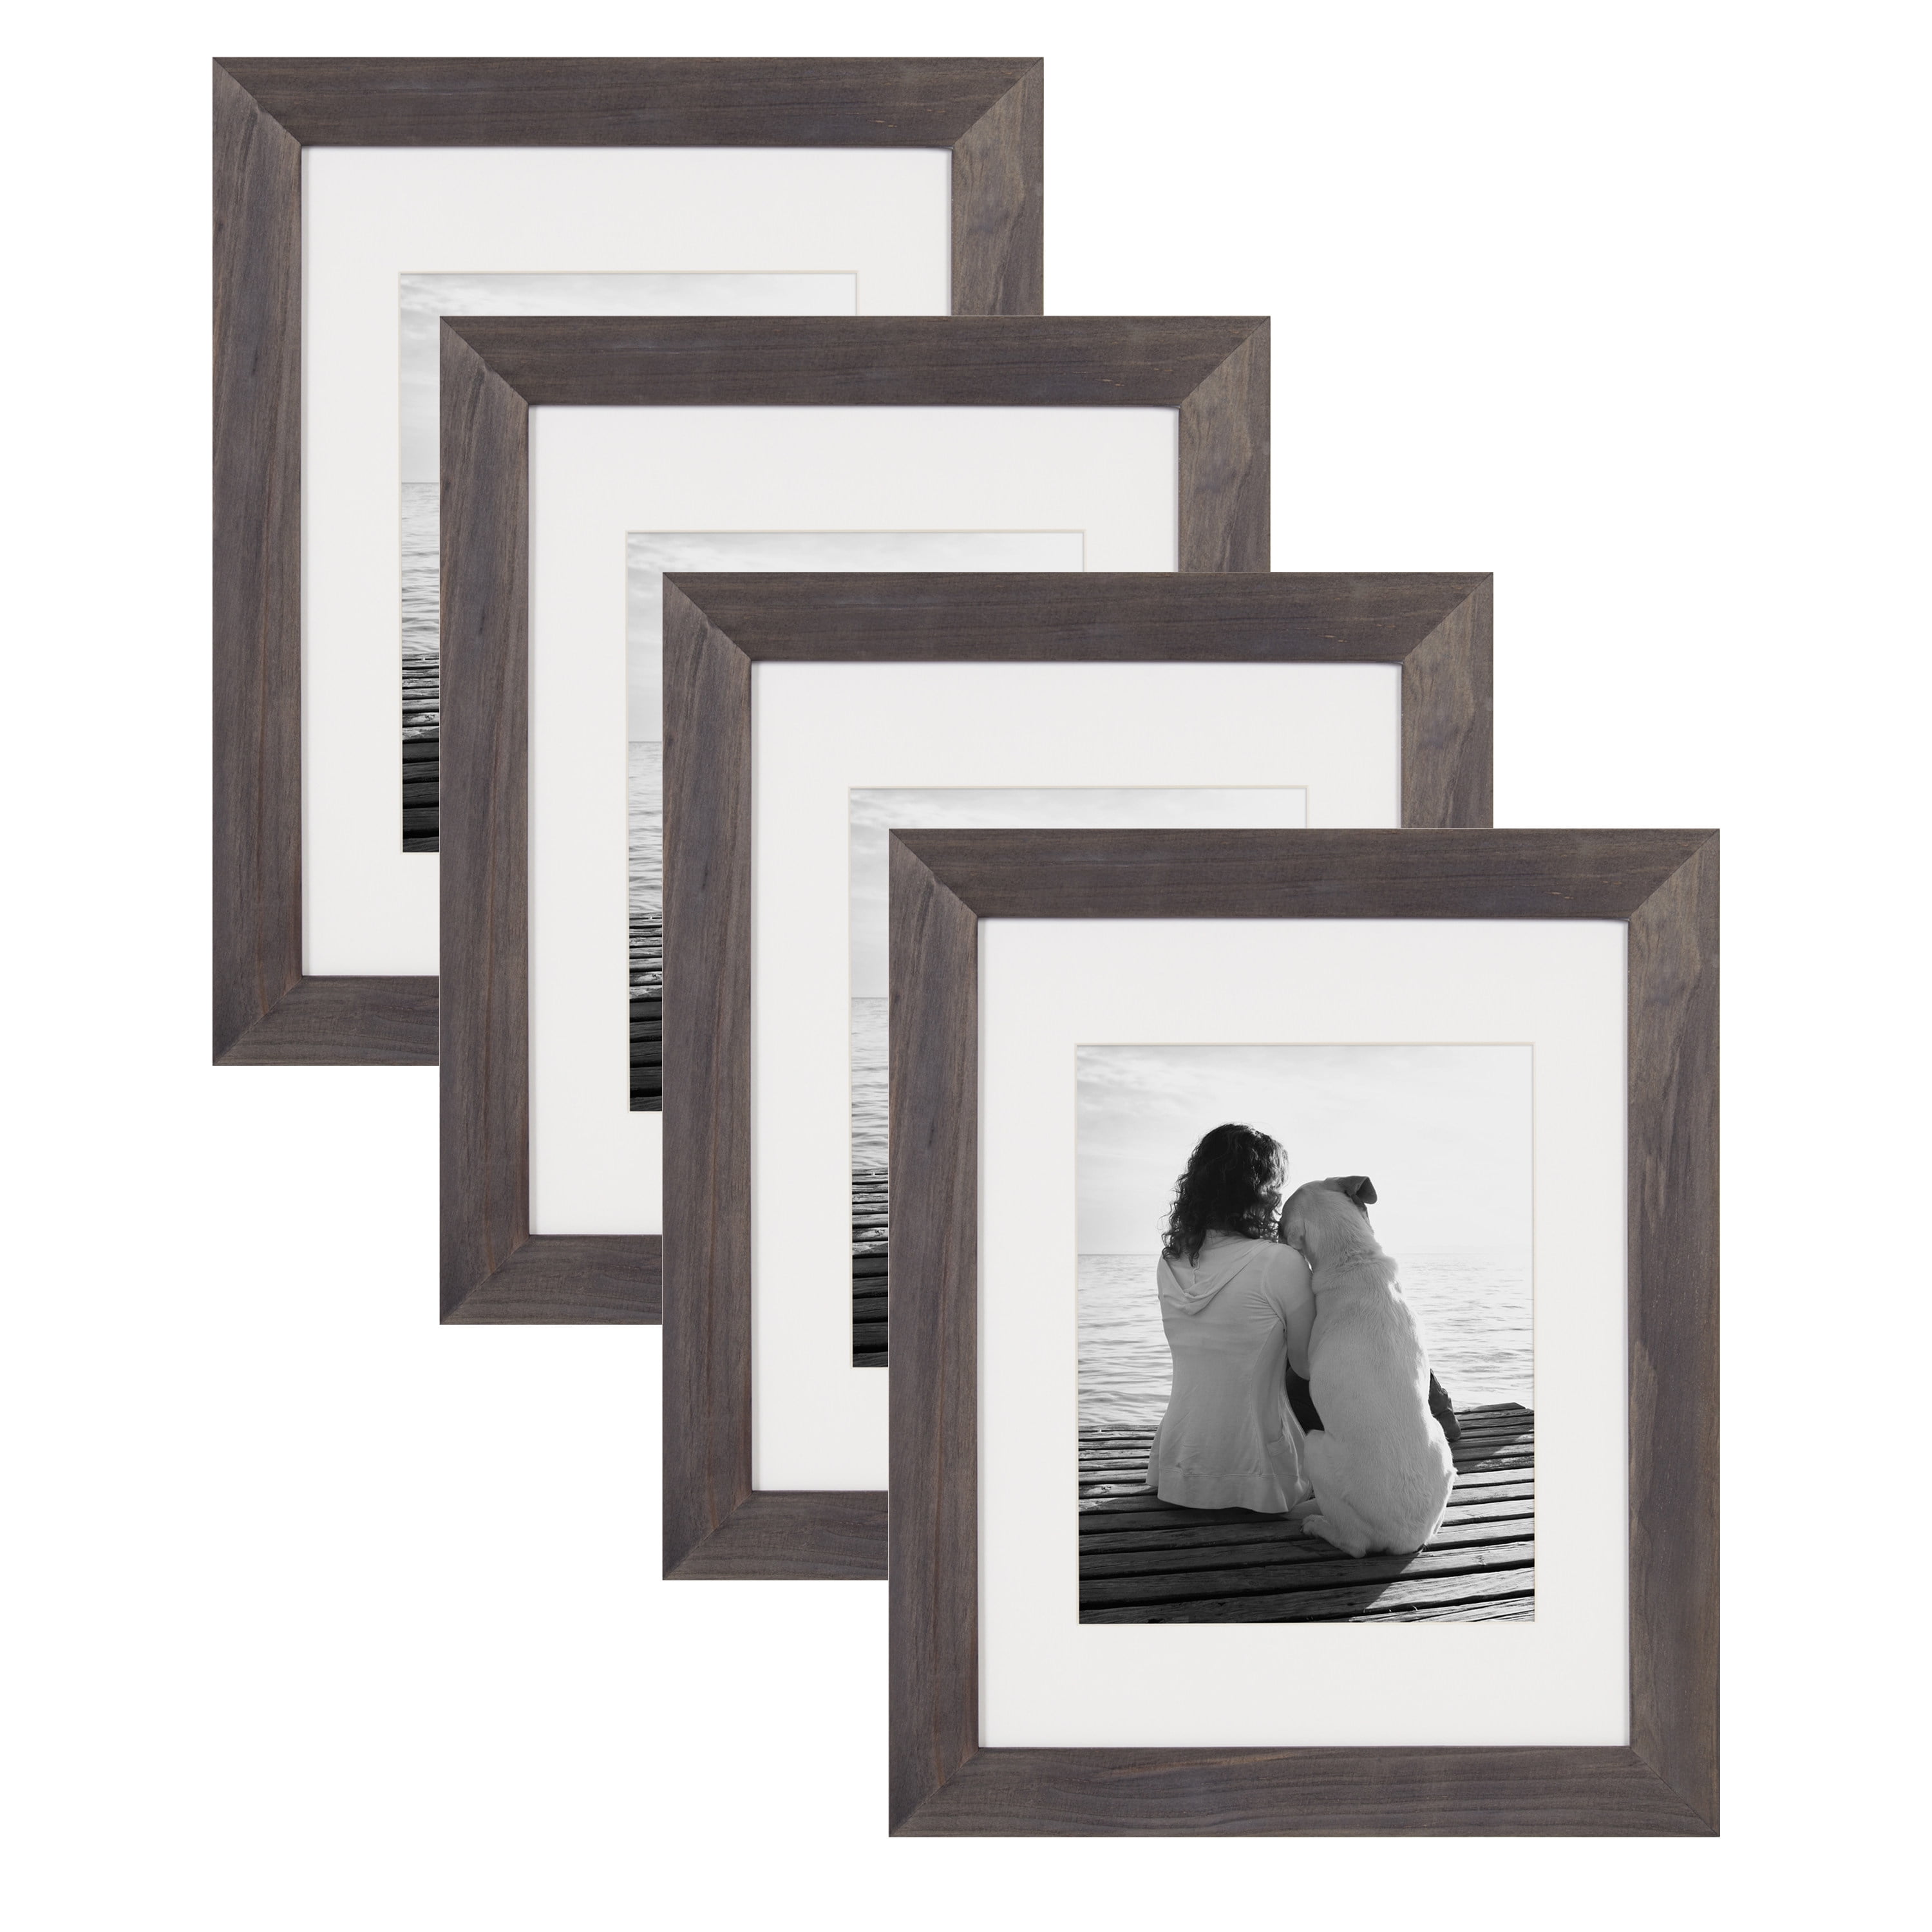 20 Pieces/set Wood Picture Frame Set Black White Retro Wall